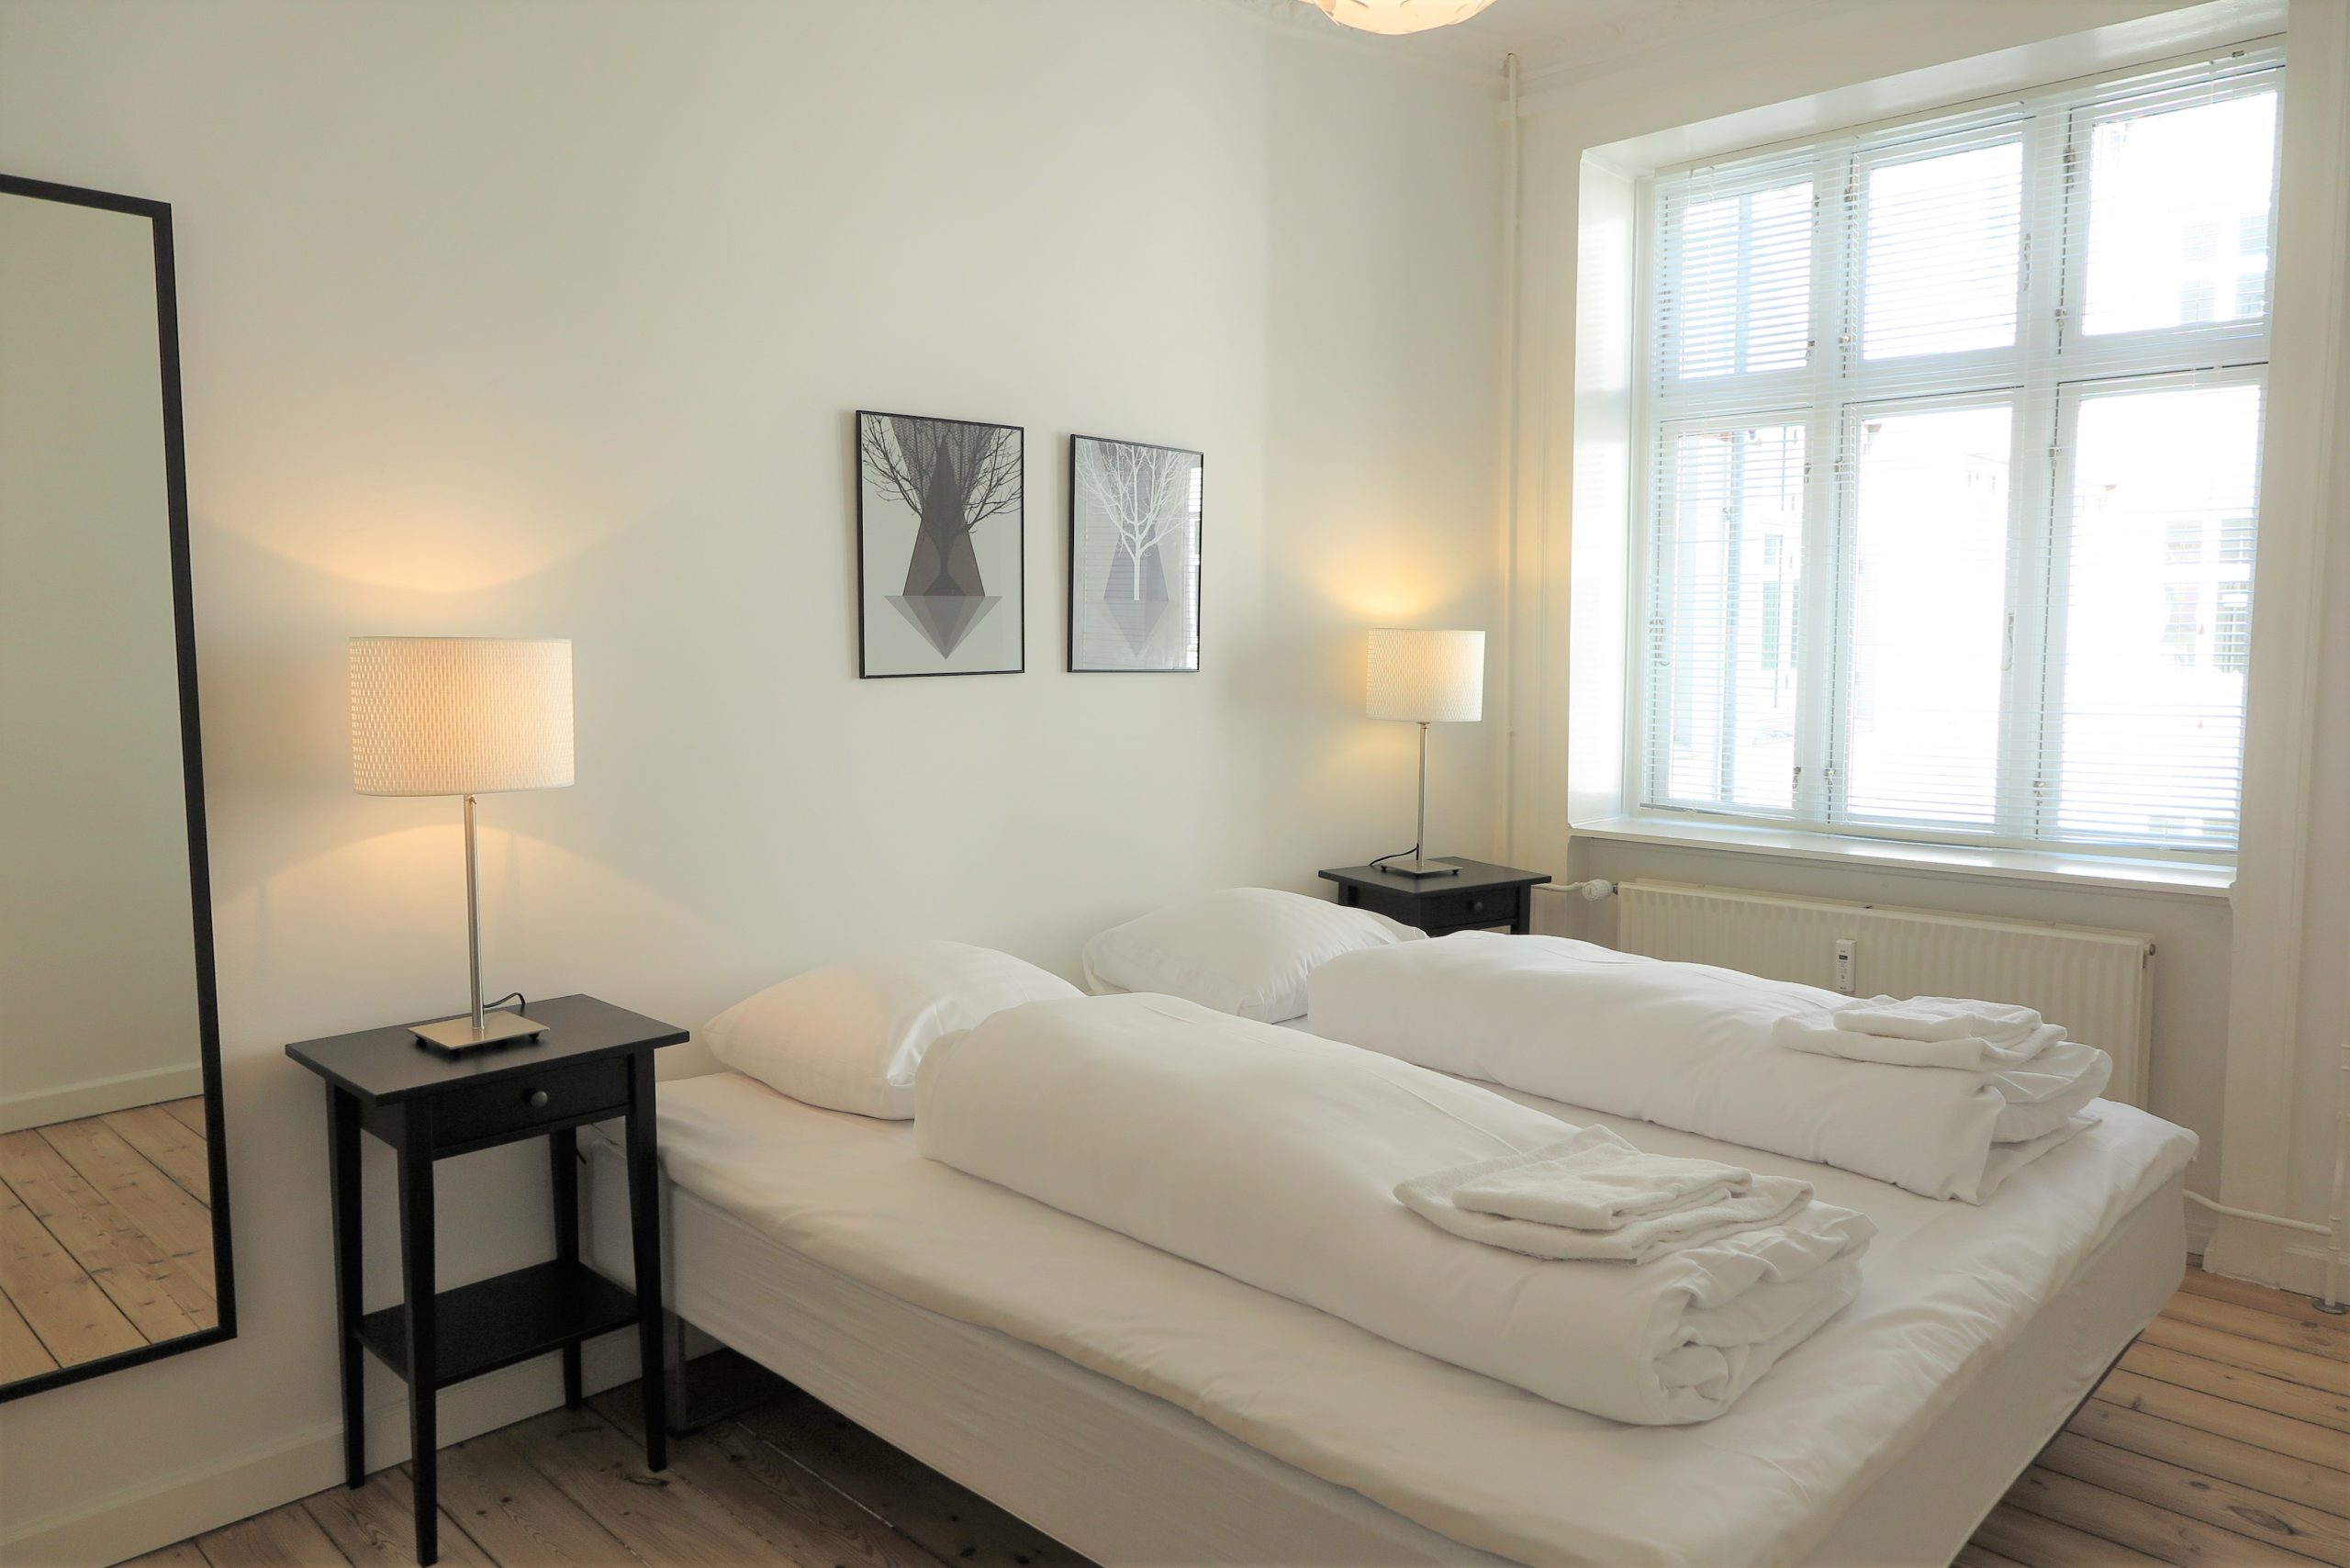 1703 – 2 bedroom apartment on Østerbro